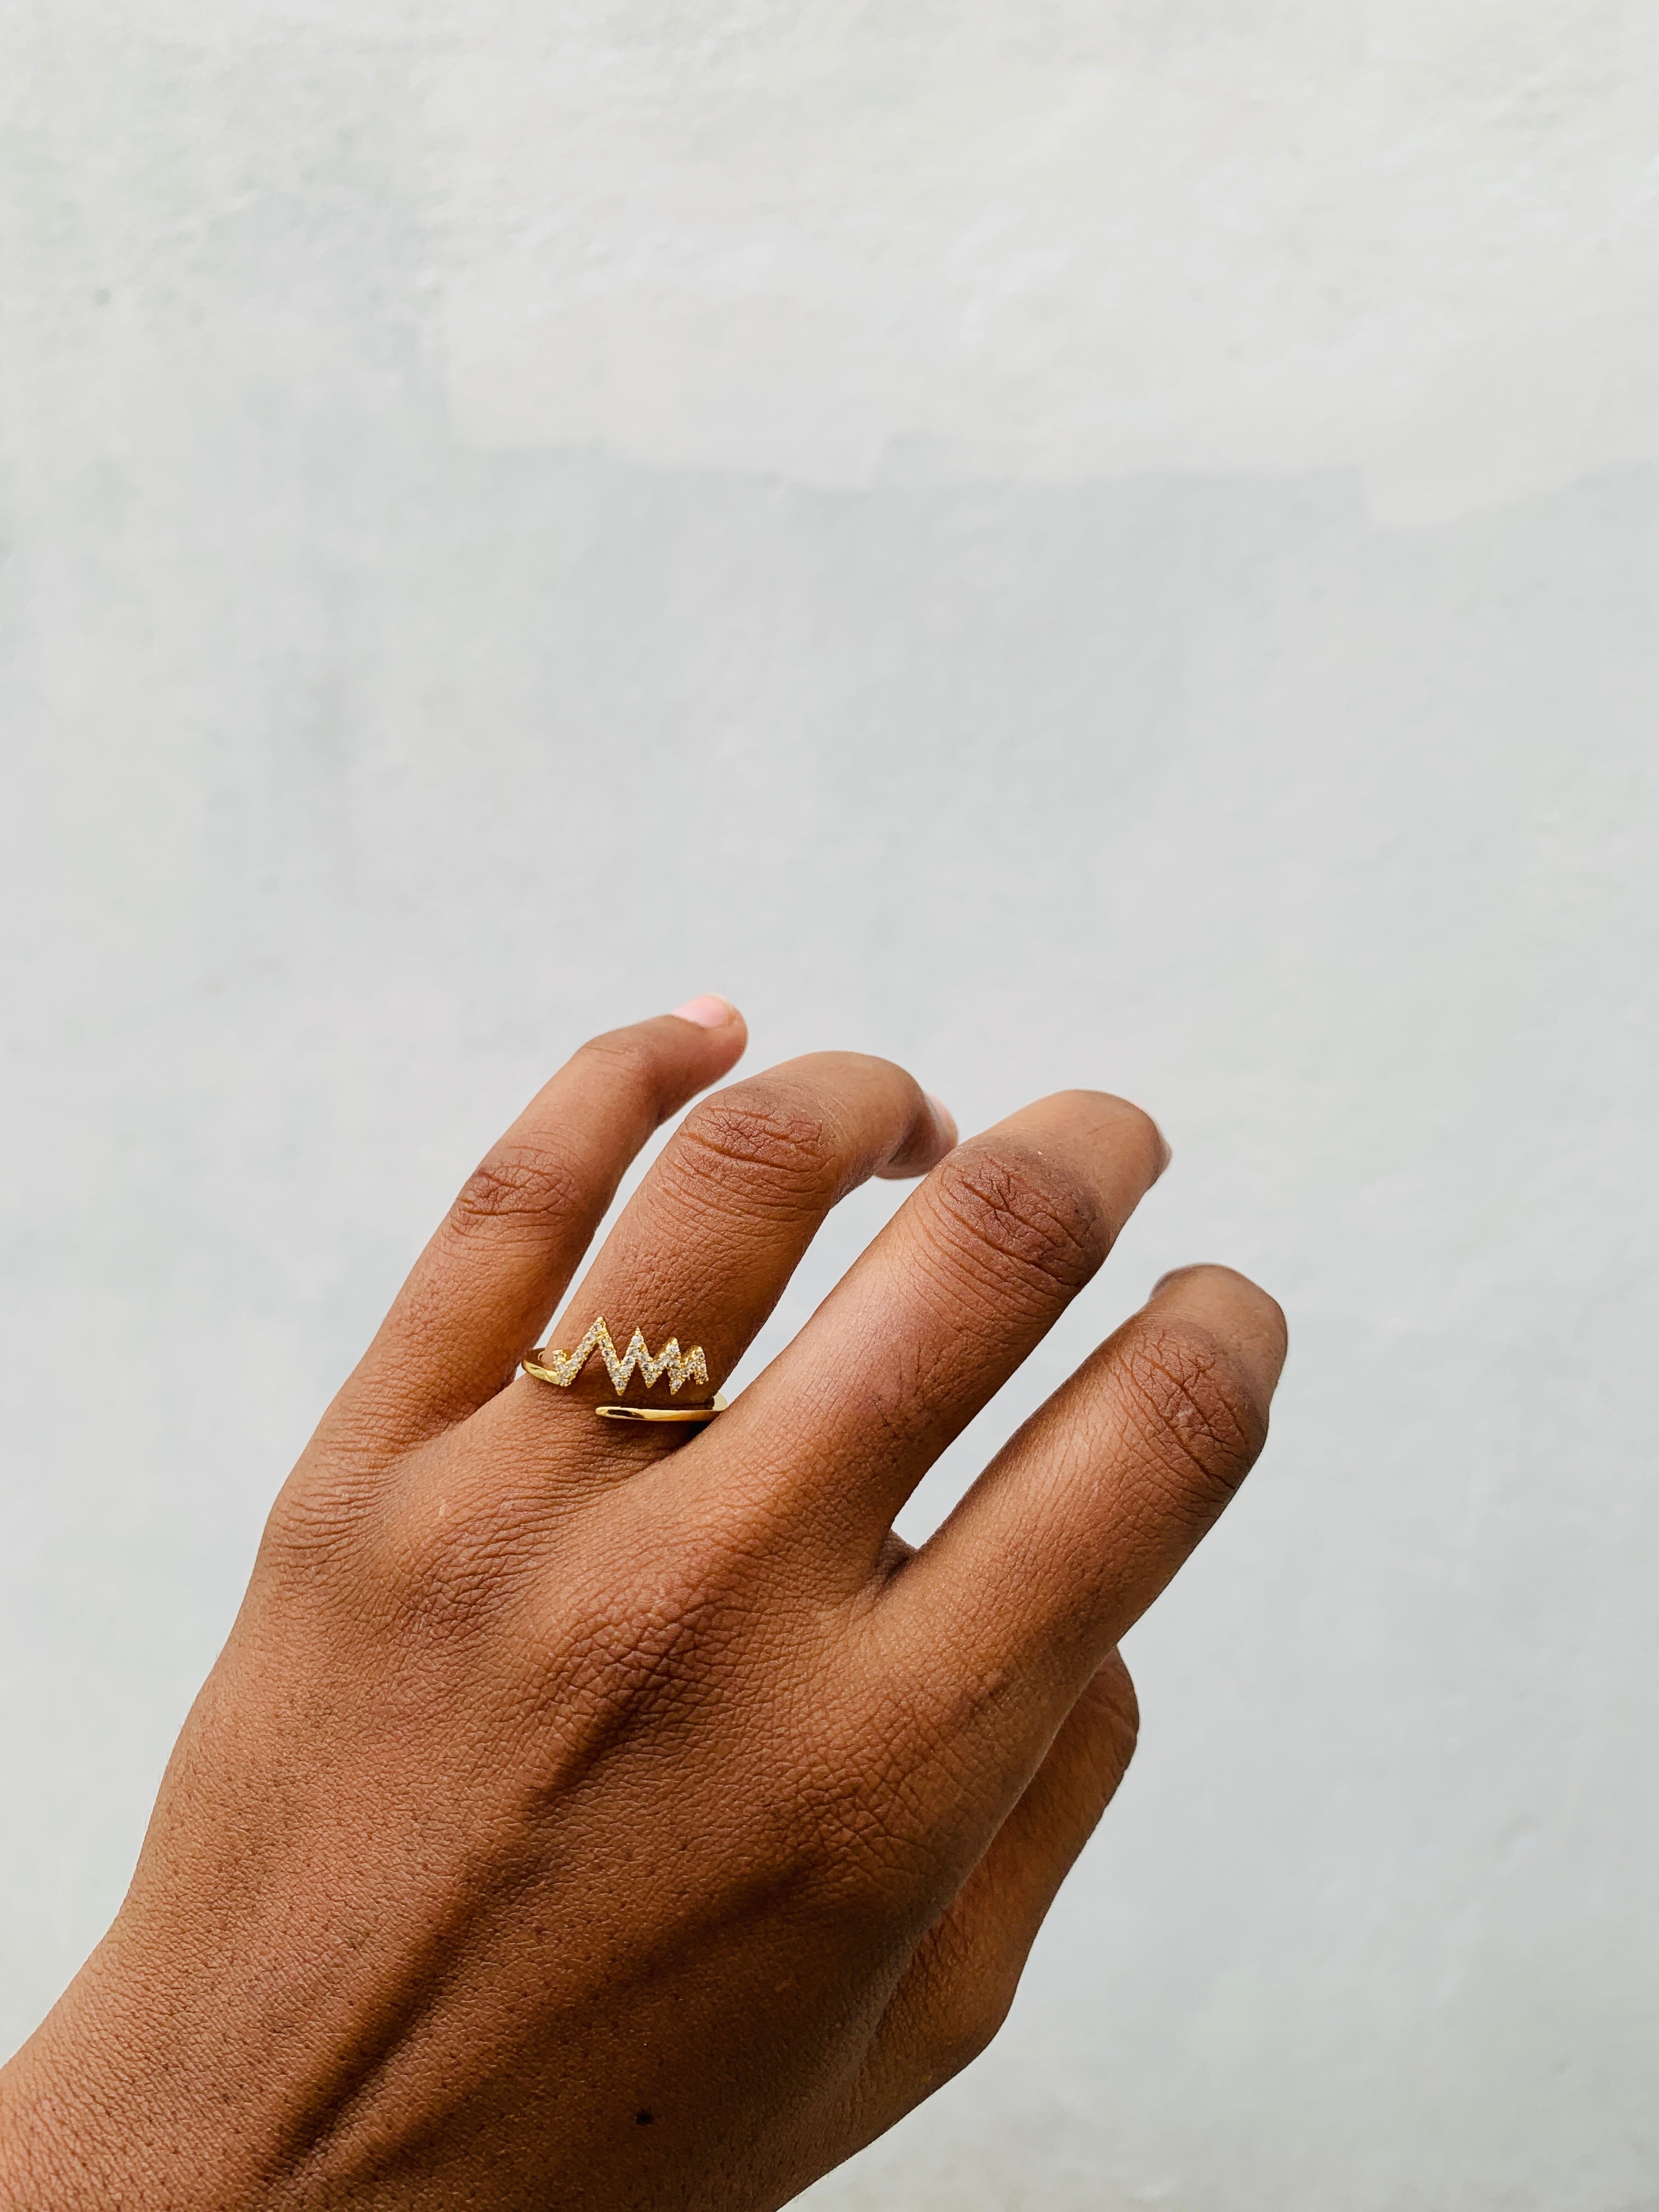 Buy quality Unique Rose Gold Diamond Finger Ring in Pune